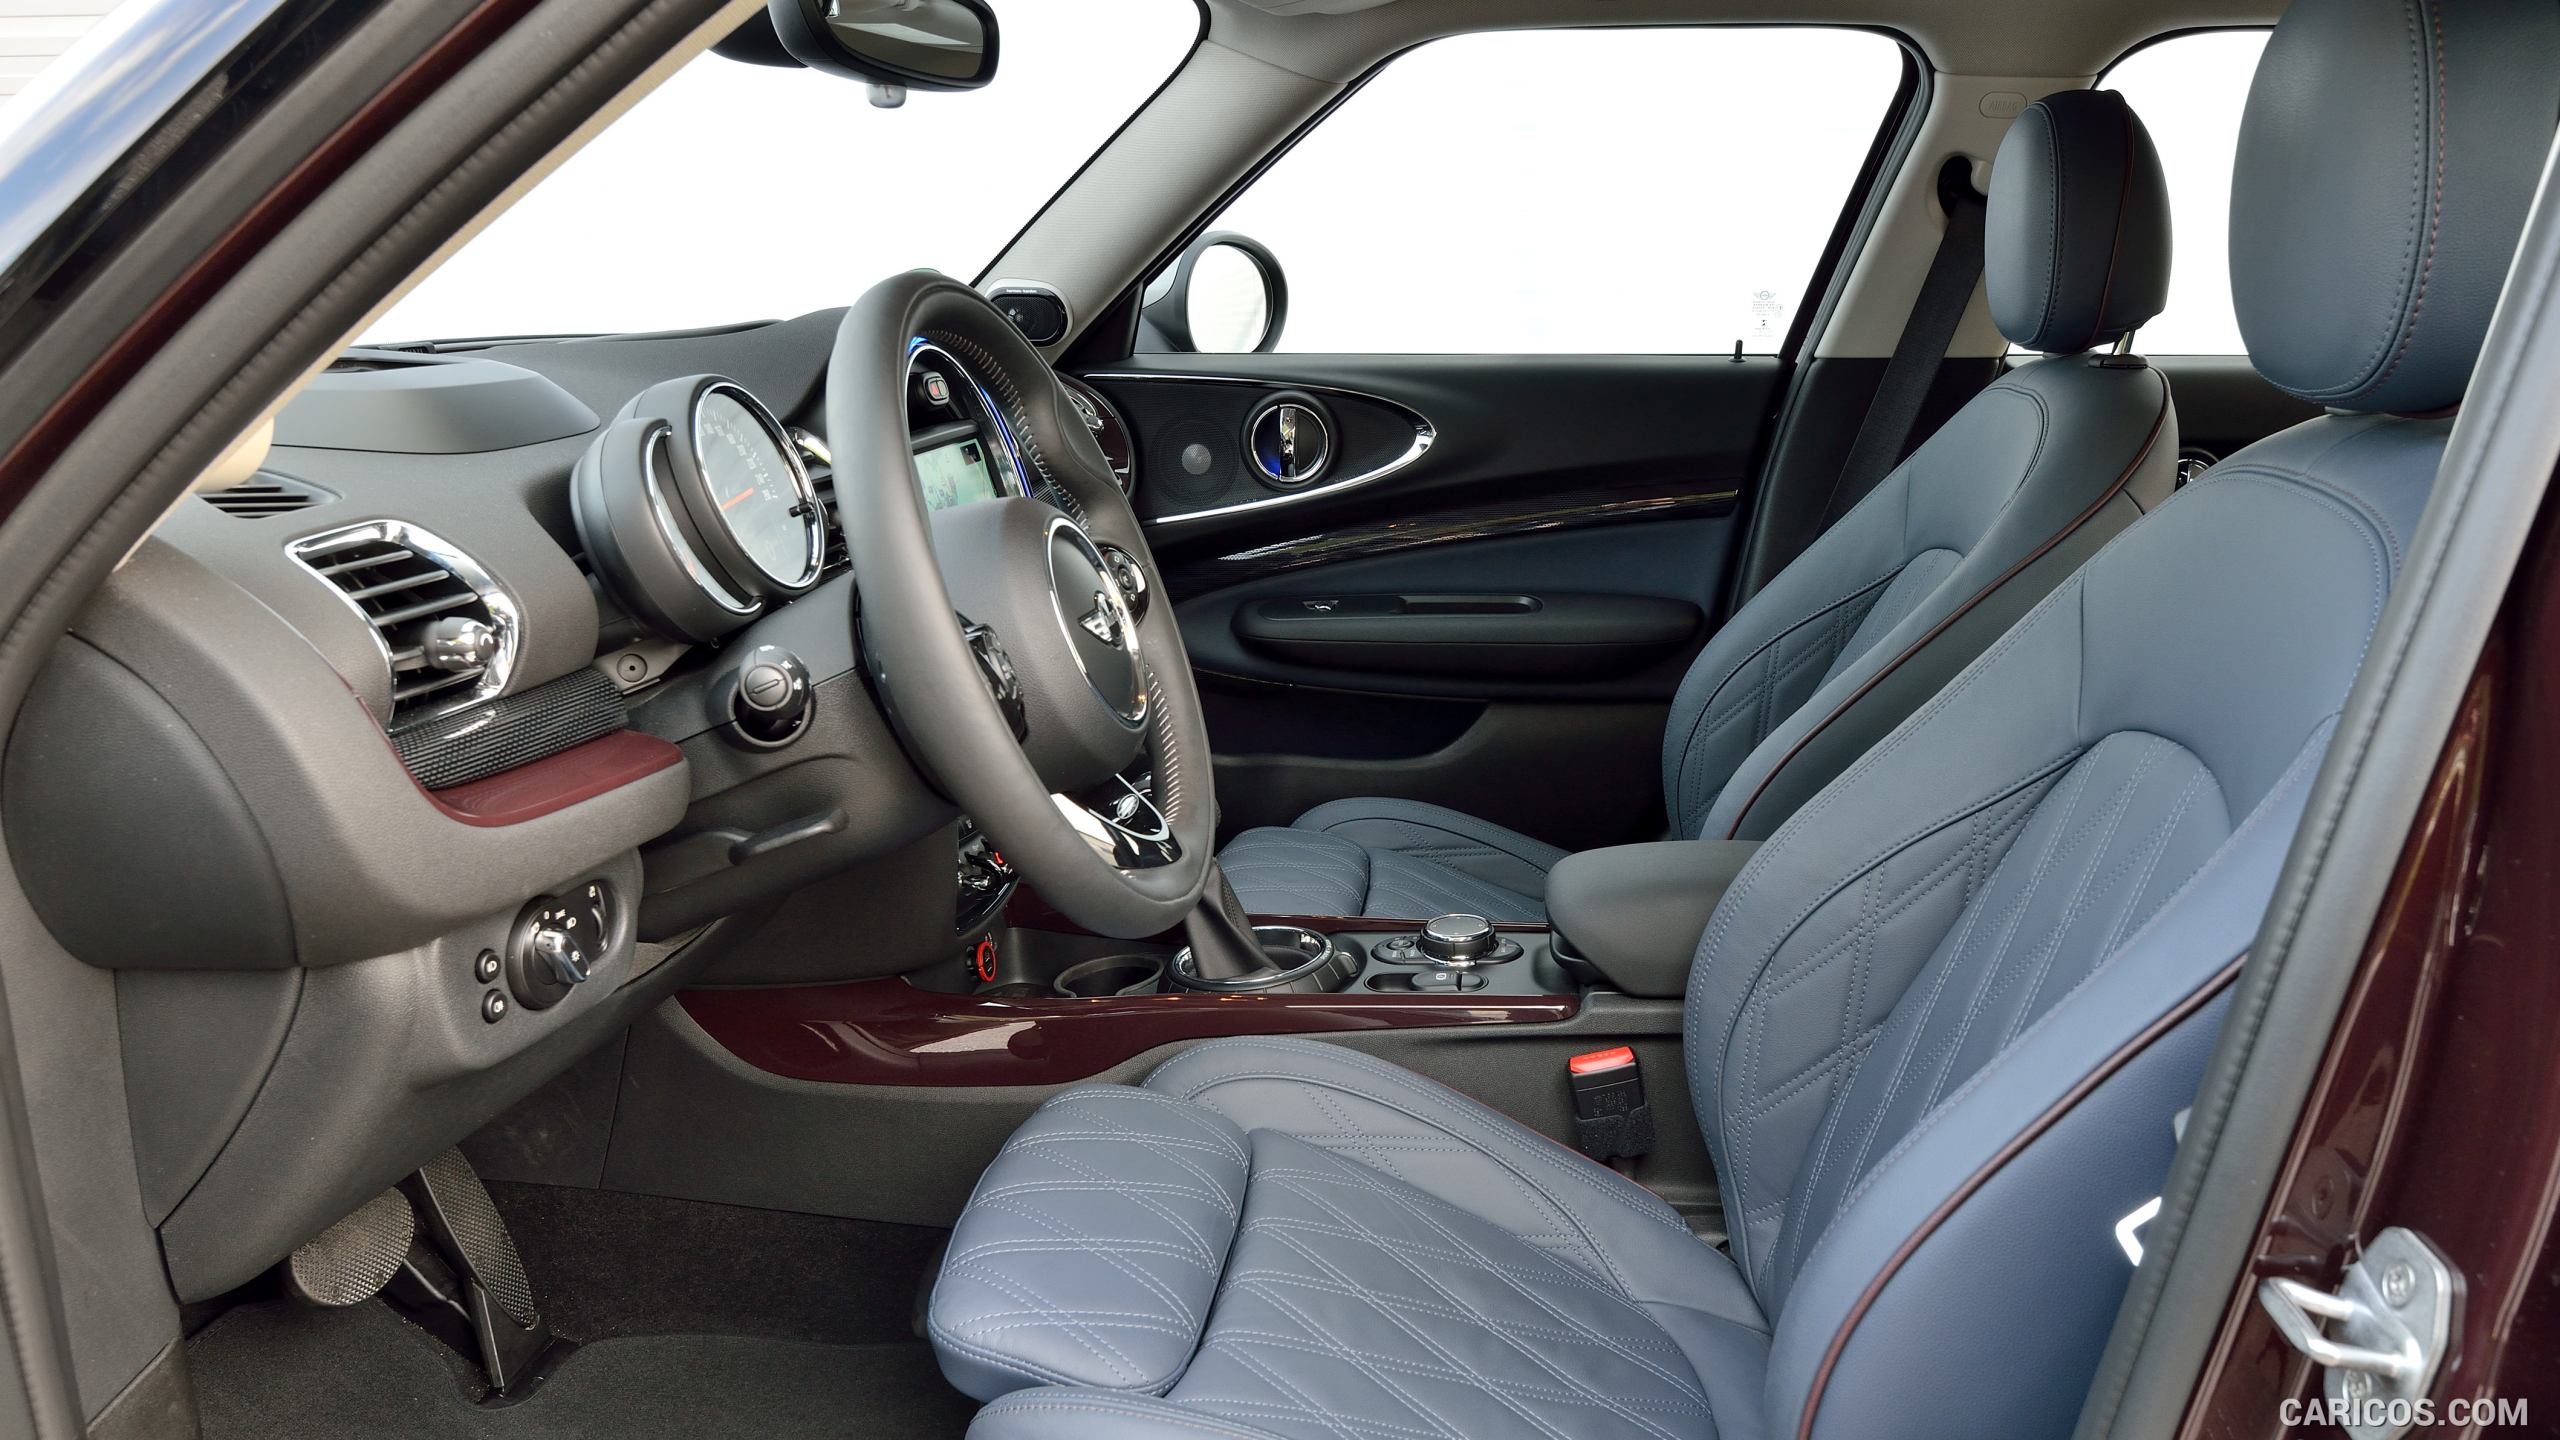 2016 MINI Cooper S Clubman in Metallic Pure Burgundy - Interior, Front Seats, #377 of 380